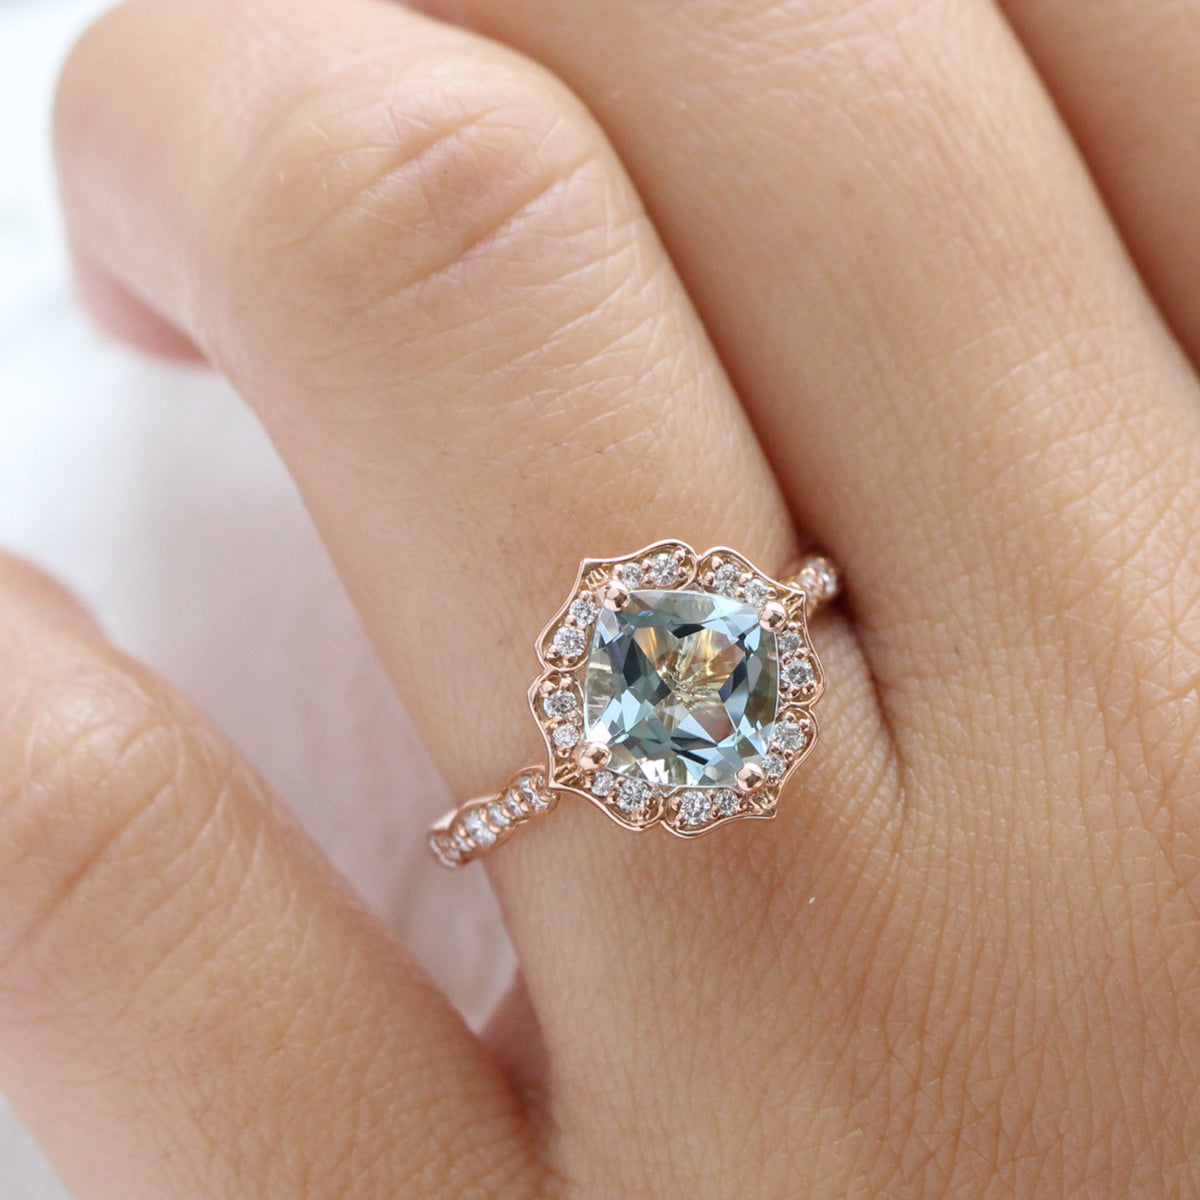 Vintage floral aquamarine diamond engagement ring rose gold by la more design jewelry